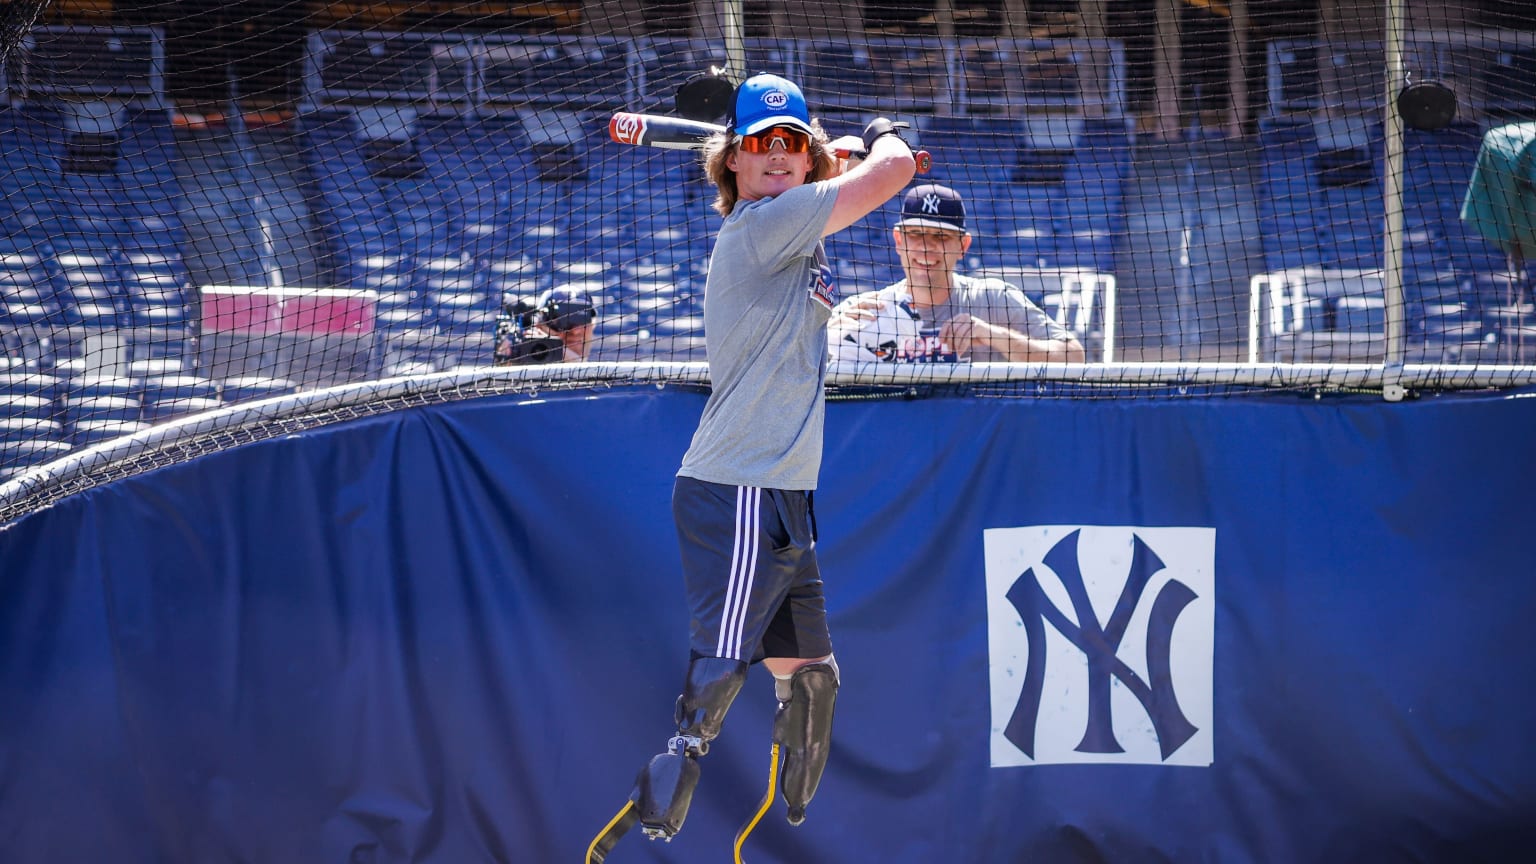 New York Yankees HOPE Week recognizes Jefferson teen